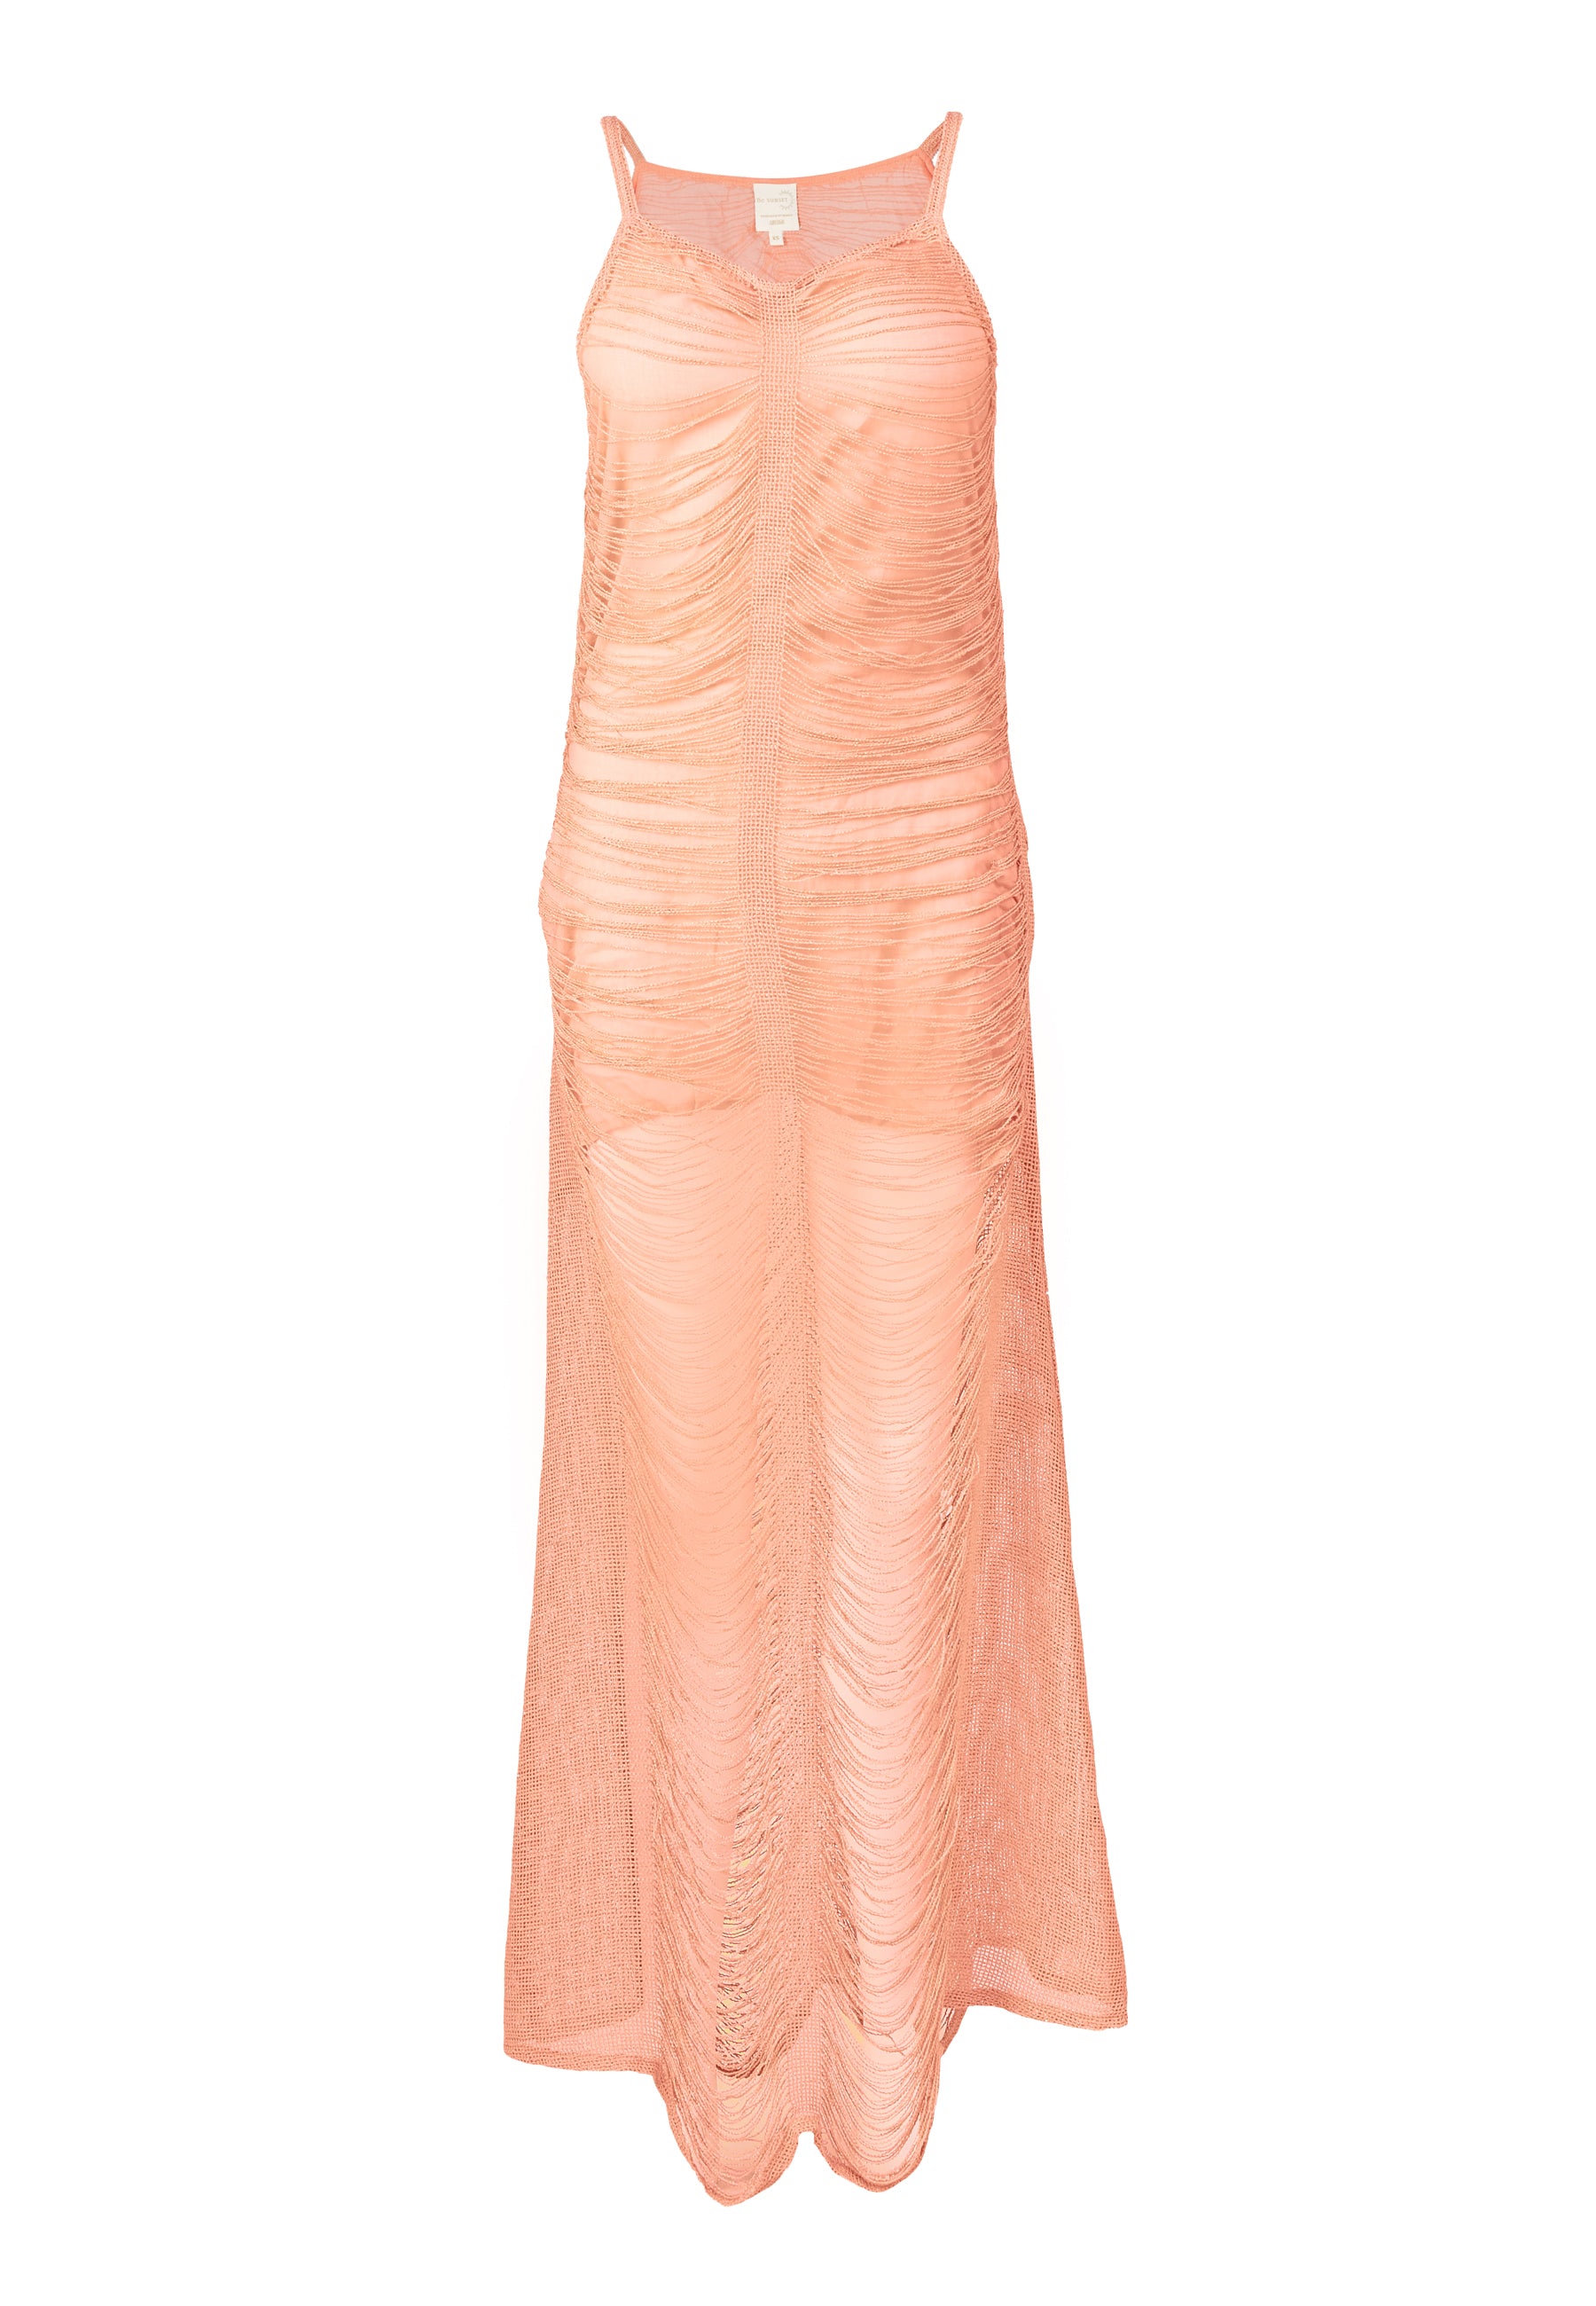 Glimmer Pink Dress